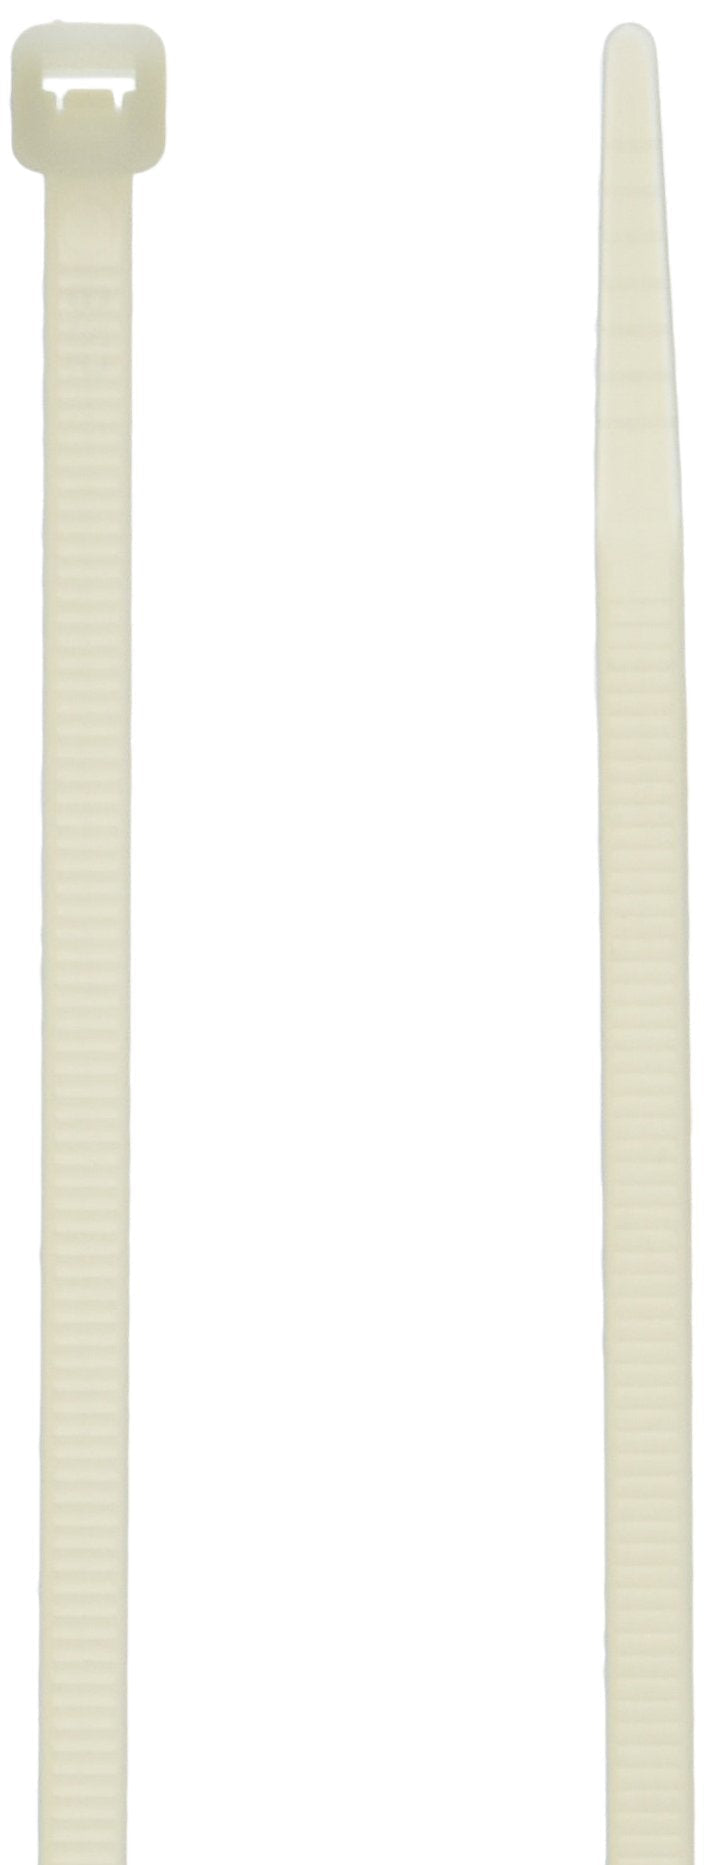  [AUSTRALIA] - Morris 20052 50LB Tensile Strength Nylon Cable Tie, 7-Inch Length, 100-Pack